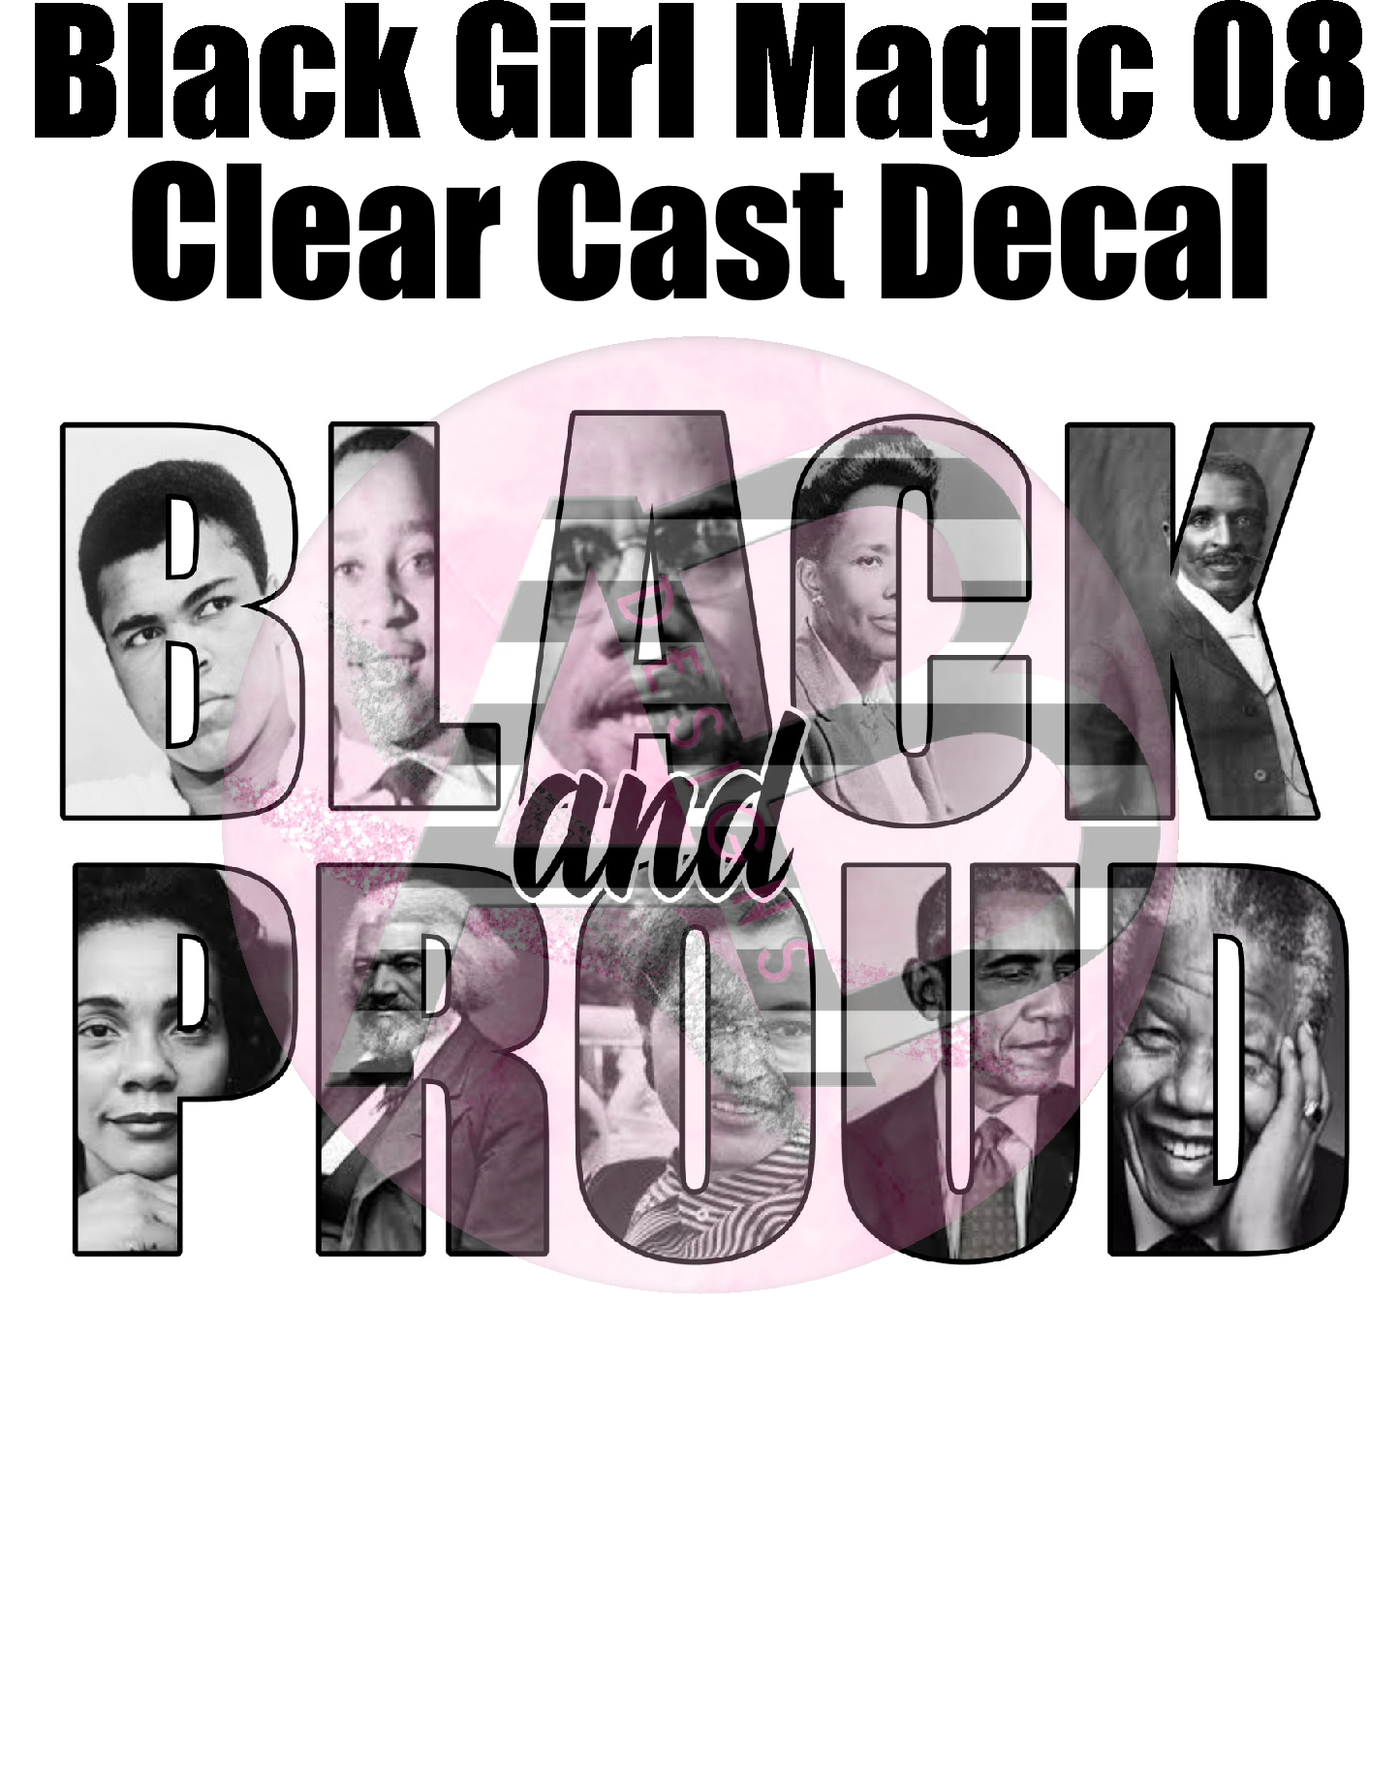 Black Girl Magic 08 - Clear Cast Decal